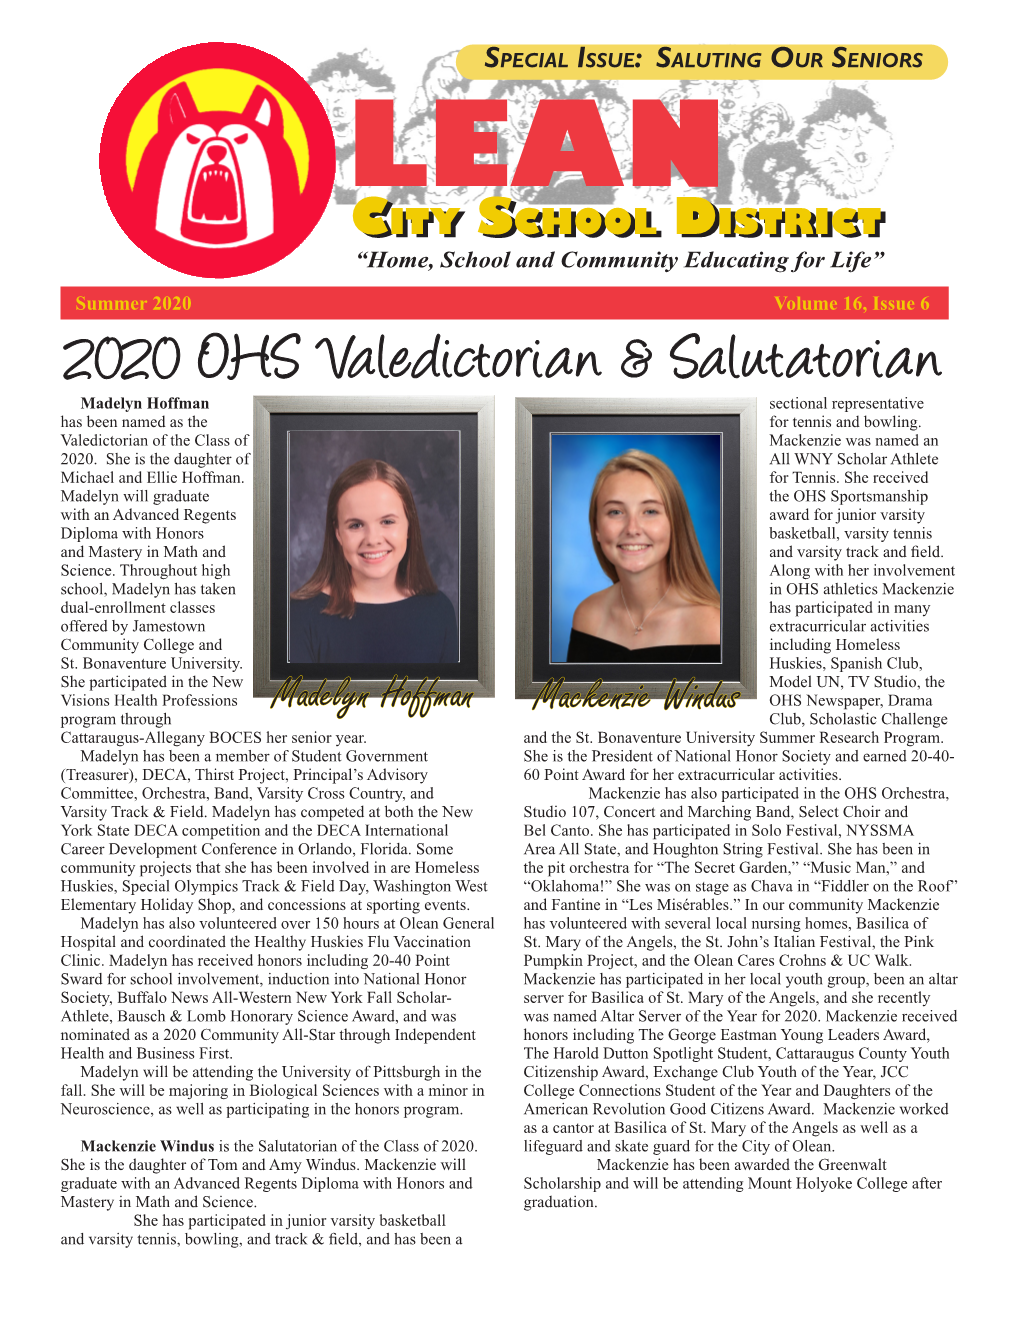 2020 OHS Valedictorian & Salutatorian